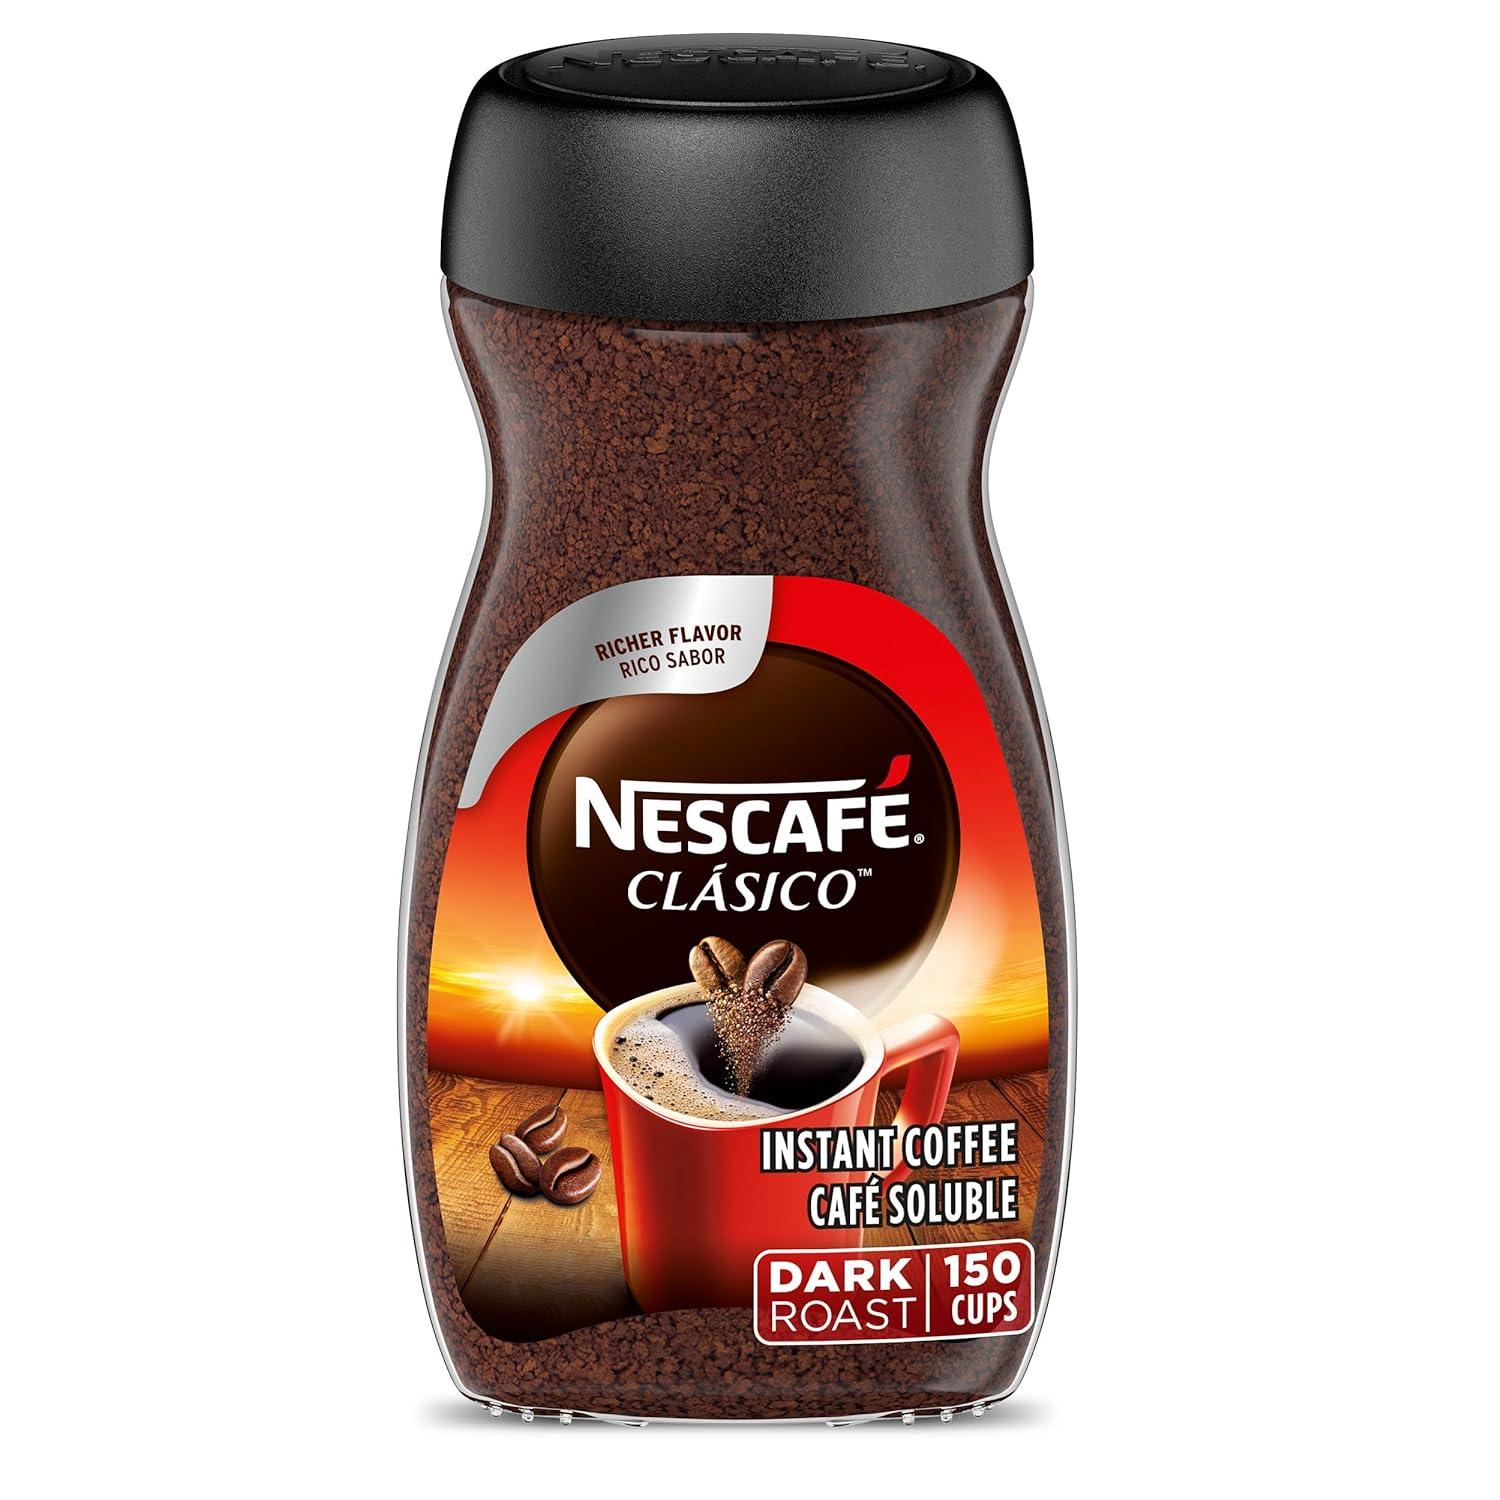 Nescafe Clasico Dark Roast Instant Coffee for $6.29